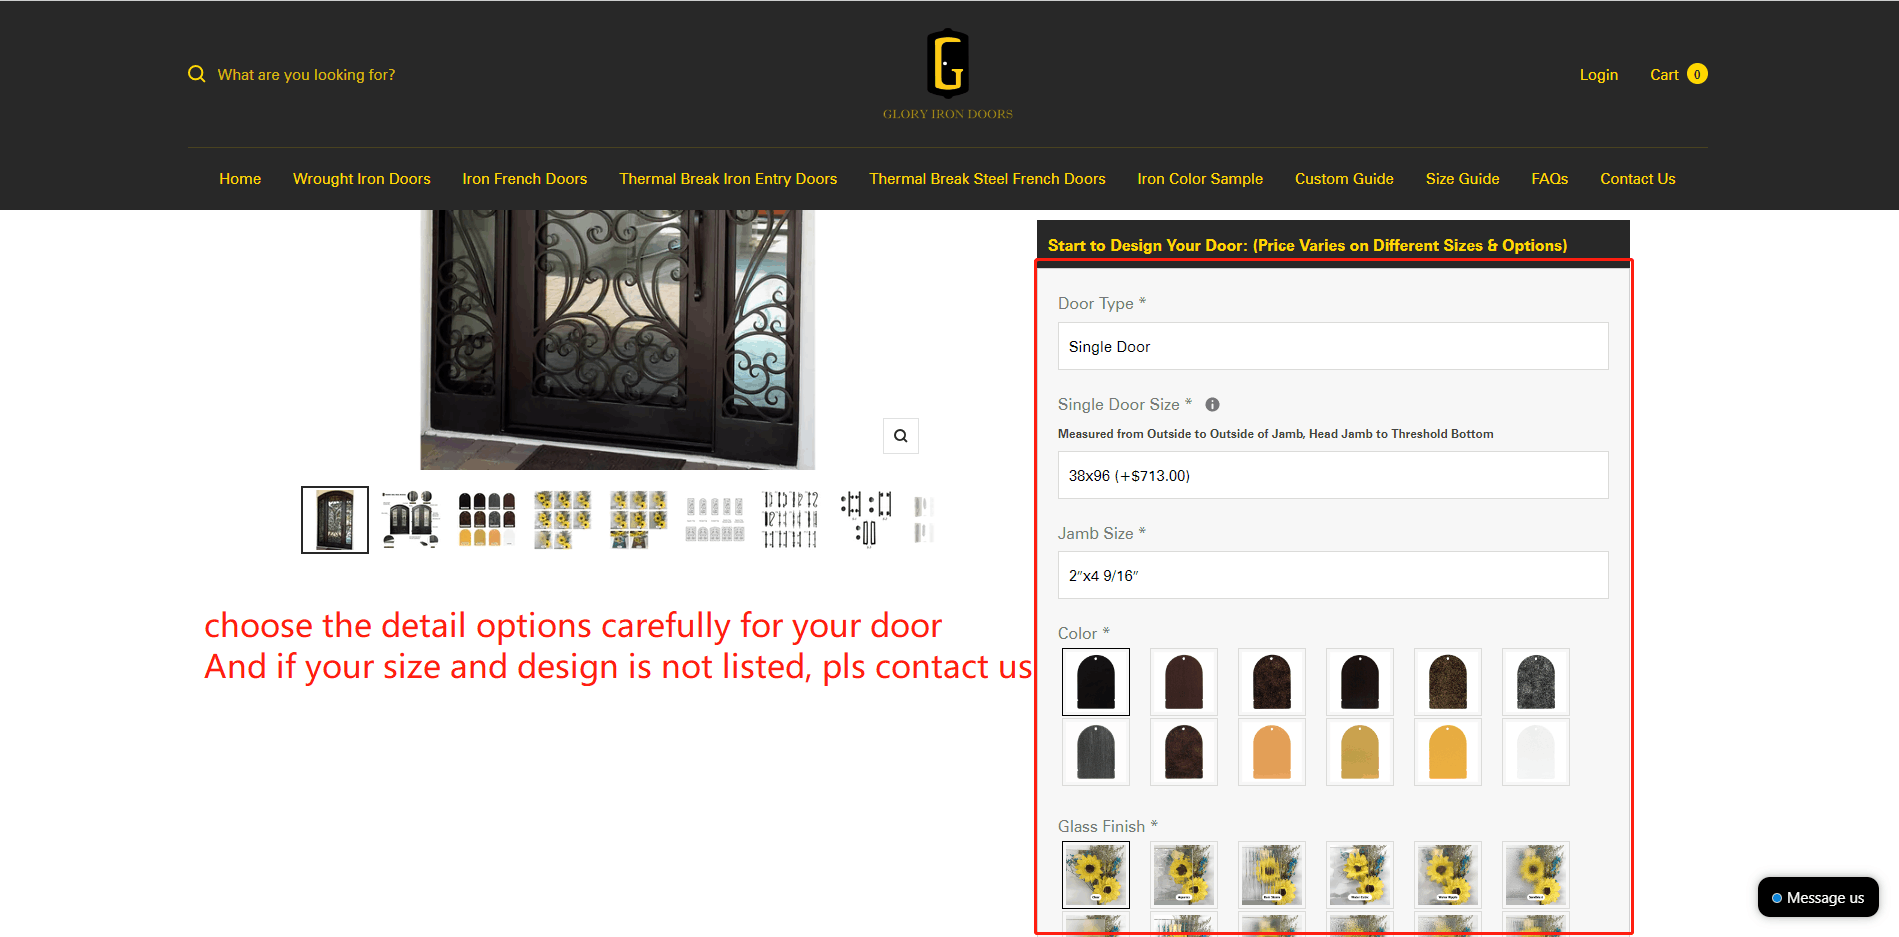 glory iron doors detail specs options instruction